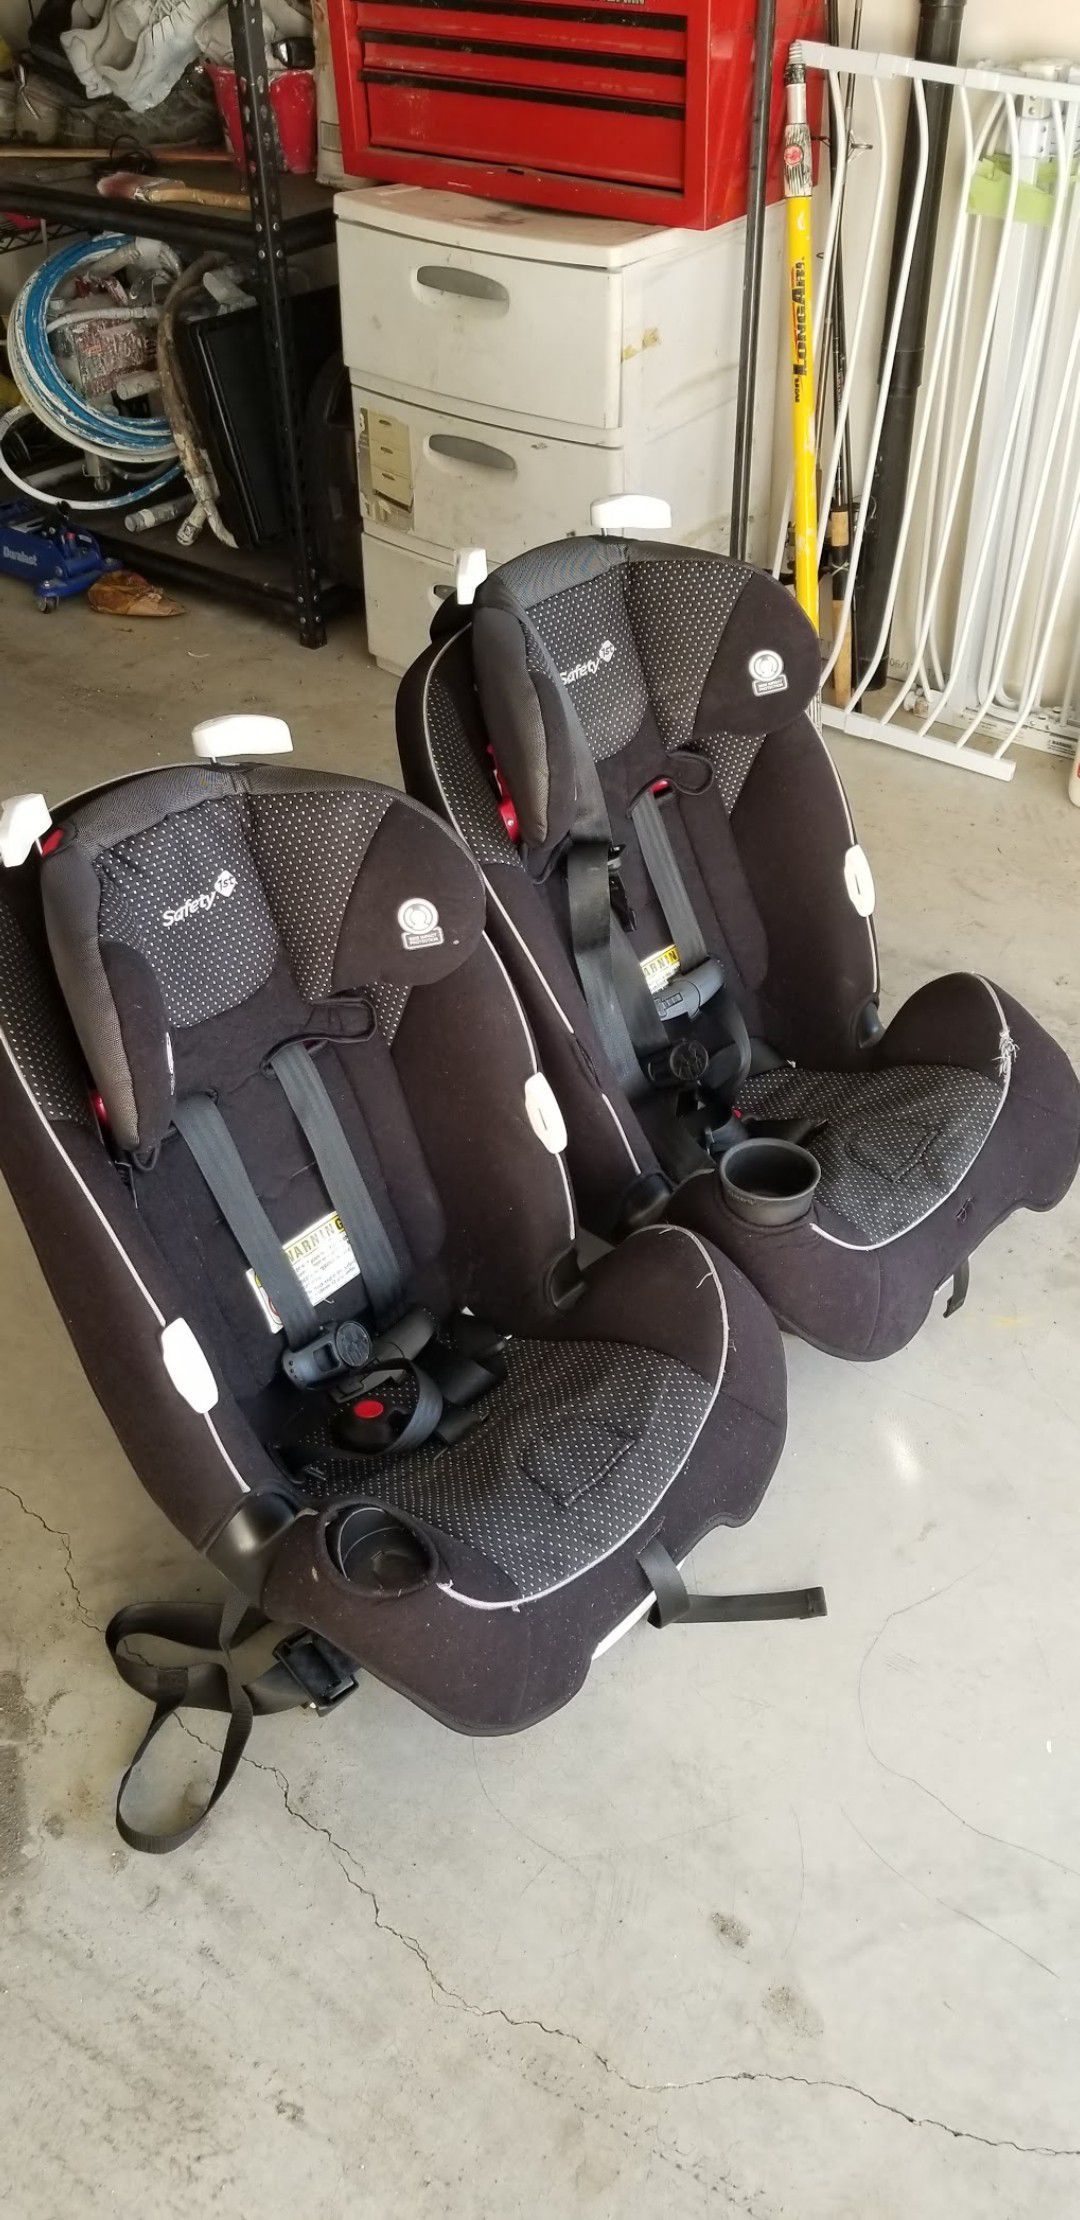 2 baby car seats